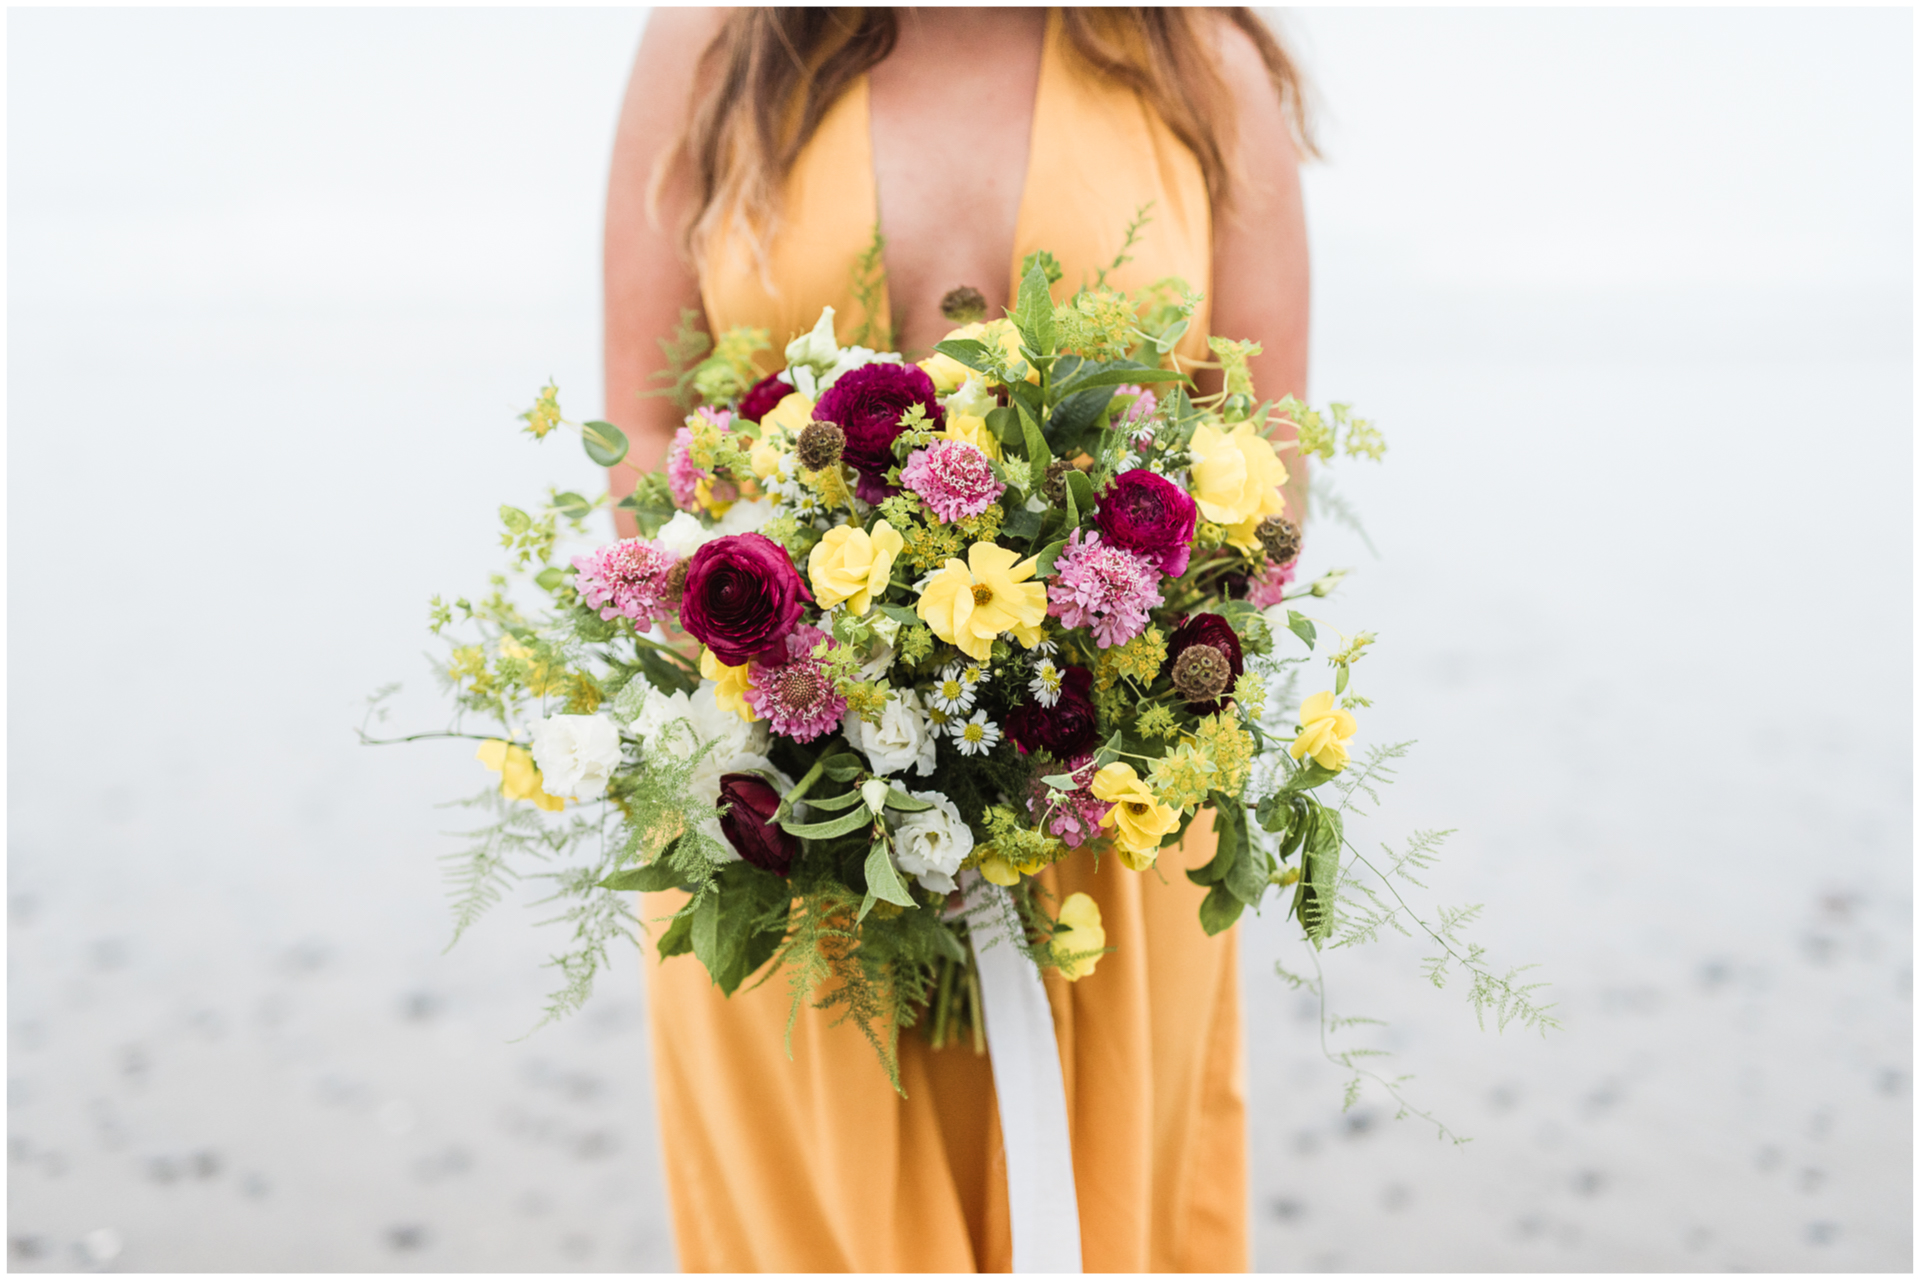 Huntsville Wedding Photographer - Wildflower bouquet - yellow white and burgundy bouquet - headshot in yellow dress